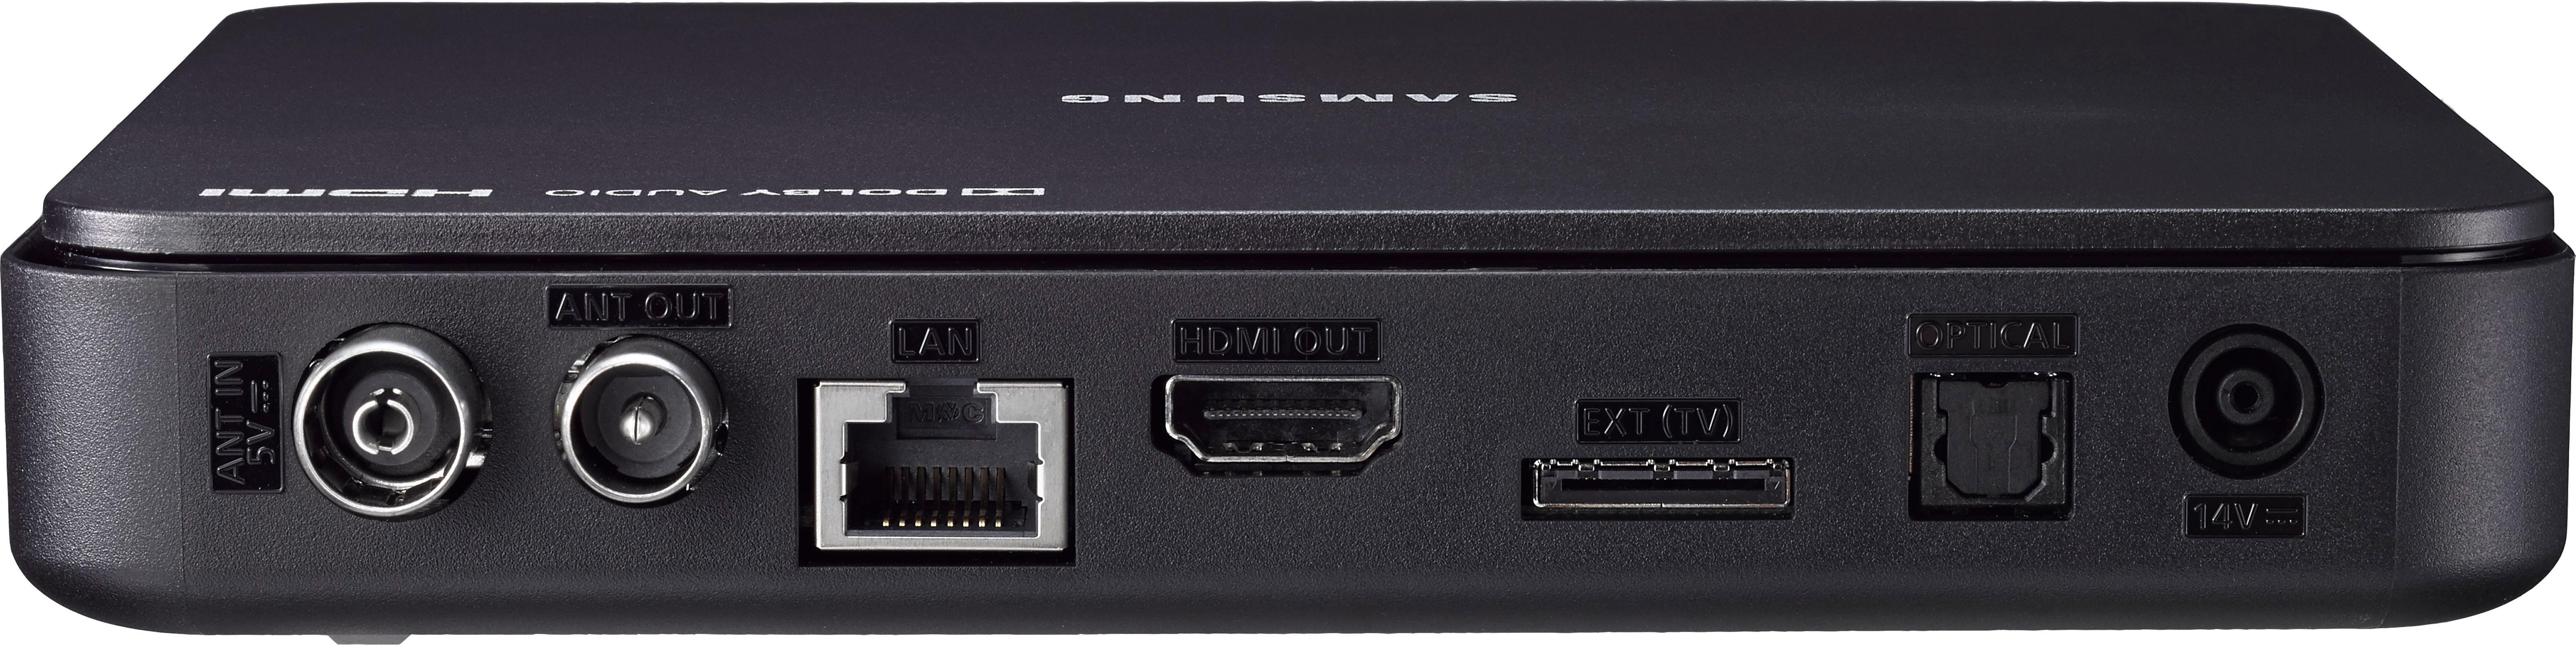 Receiver SAMSUNG (DVB-T, GX-MB Schwarz) DVB-T2 540 (H.265), TL/ZG